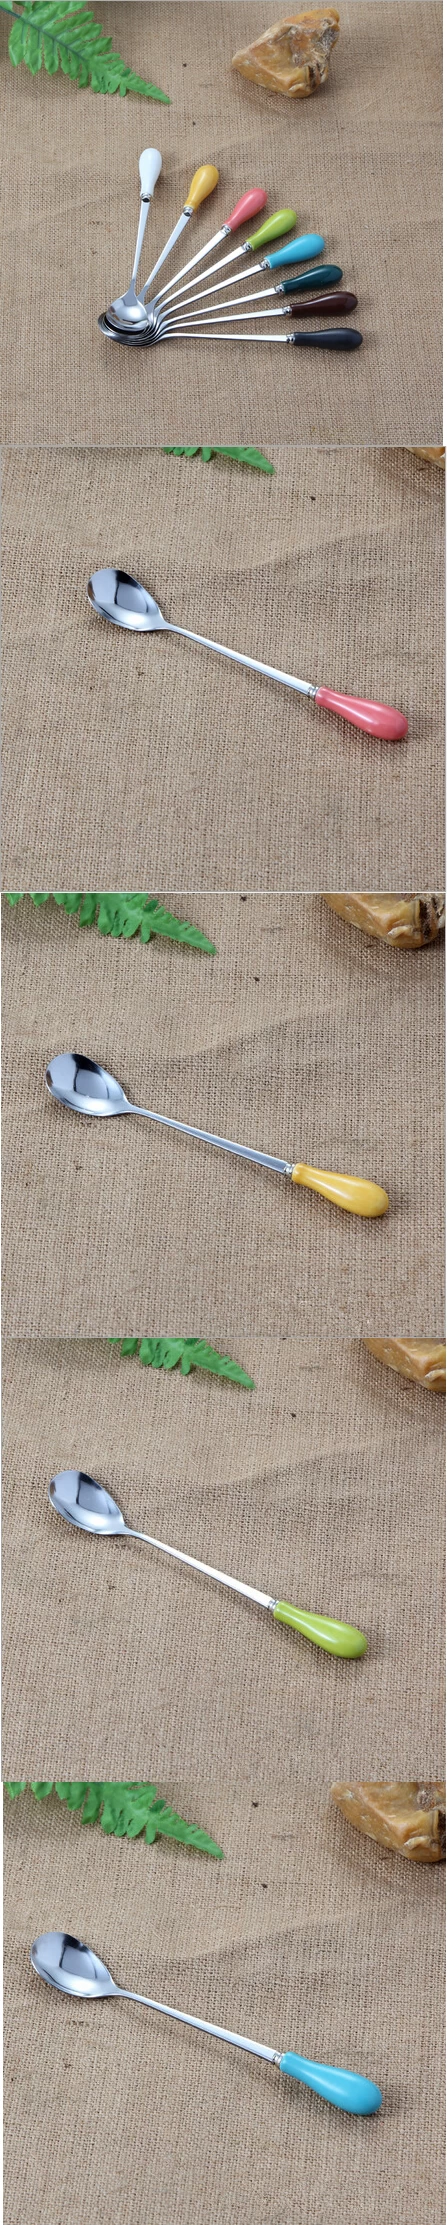 Stainless Steel spoon 